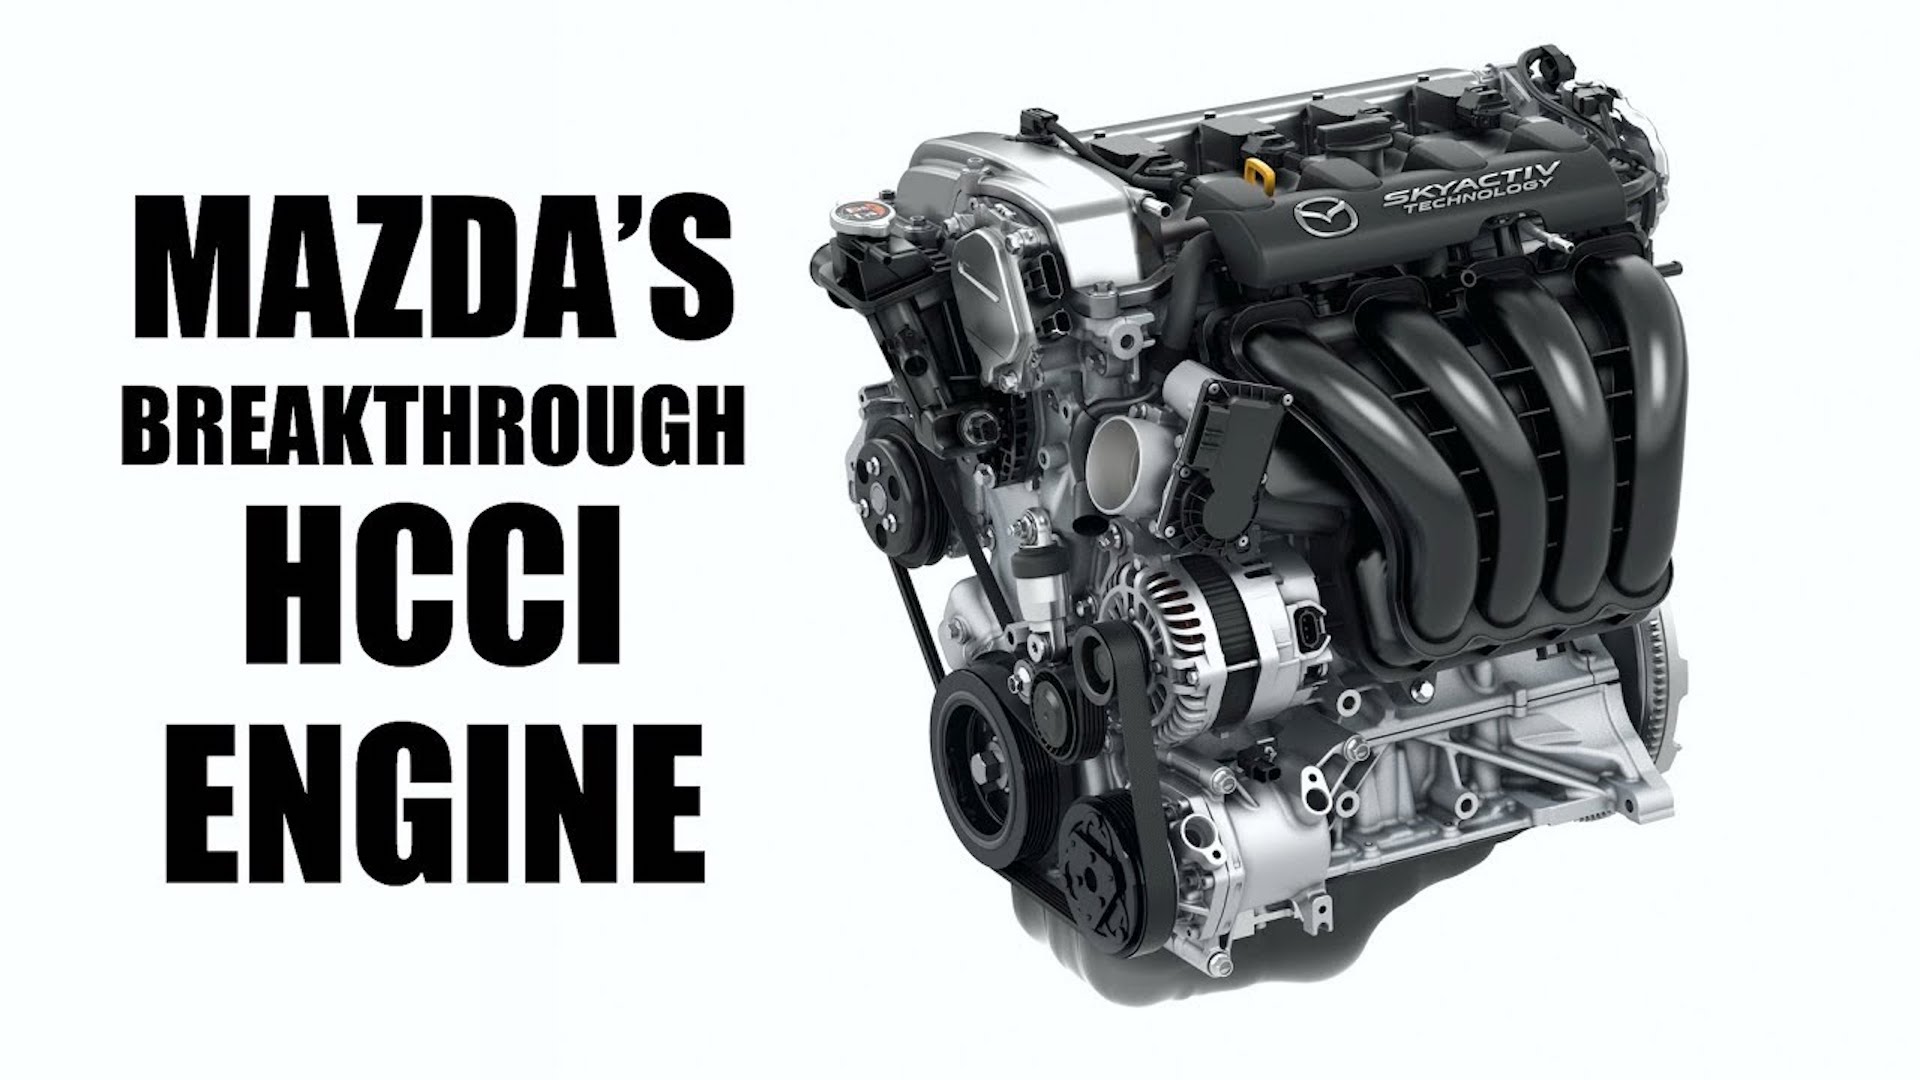 Here's how Mazda's HCCI engine works